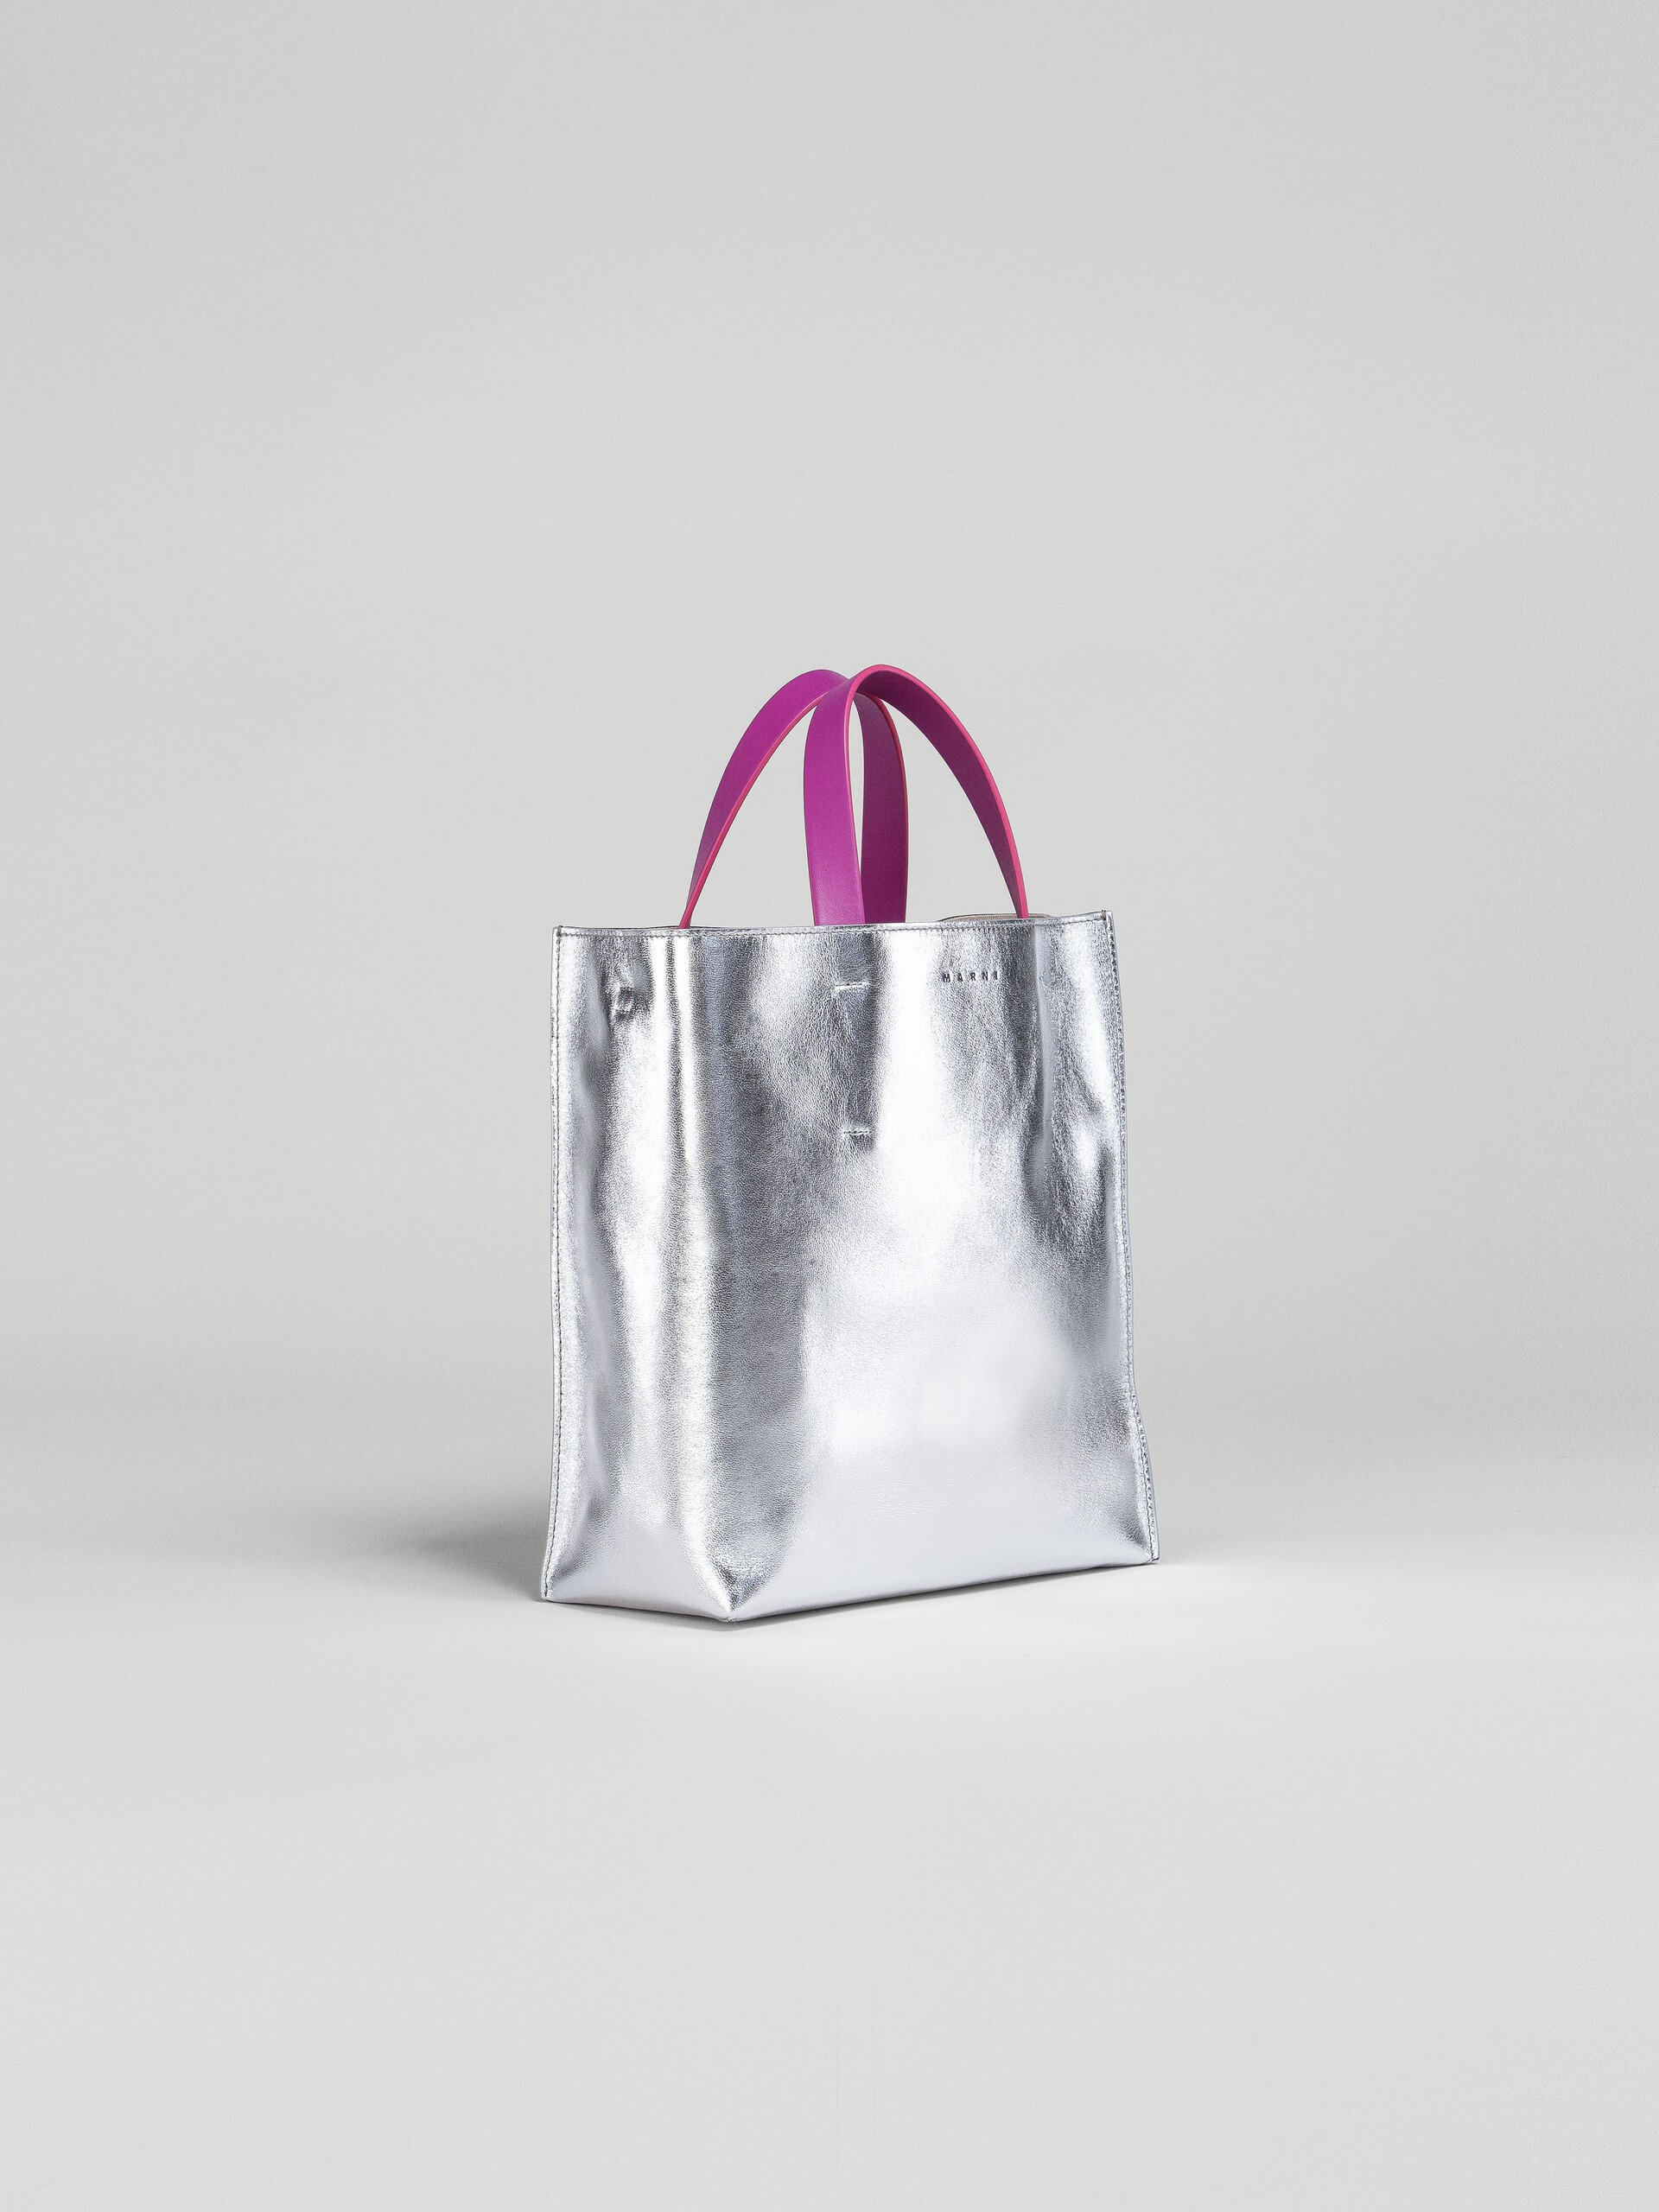 Silver black fuchsia metallic leather small MUSEO SOFT bag - Shopping Bags - Image 5